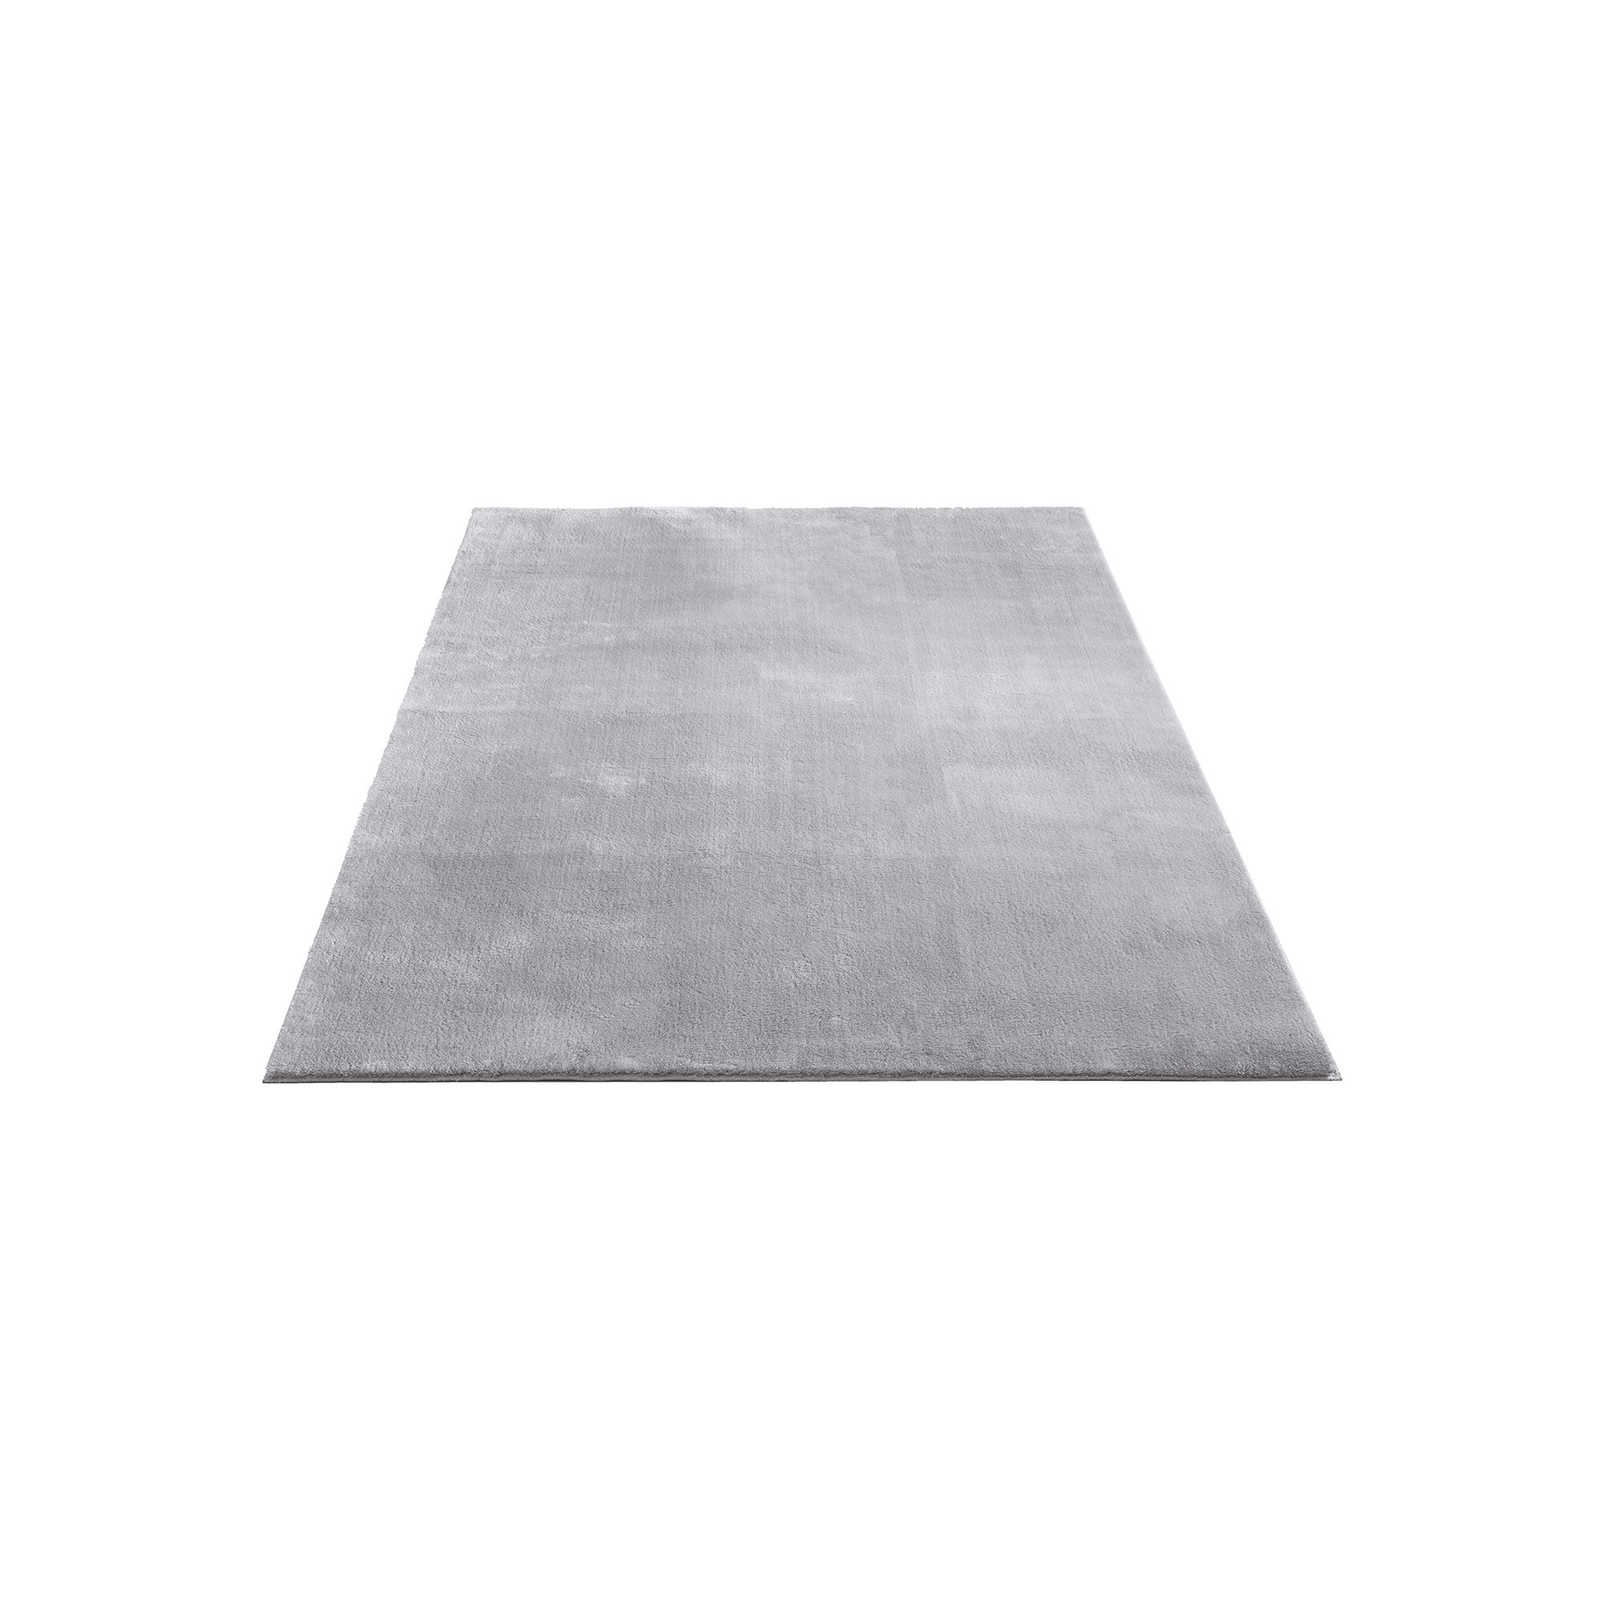 Feiner Hochflor Teppich in Grau – 230 x 160 cm
